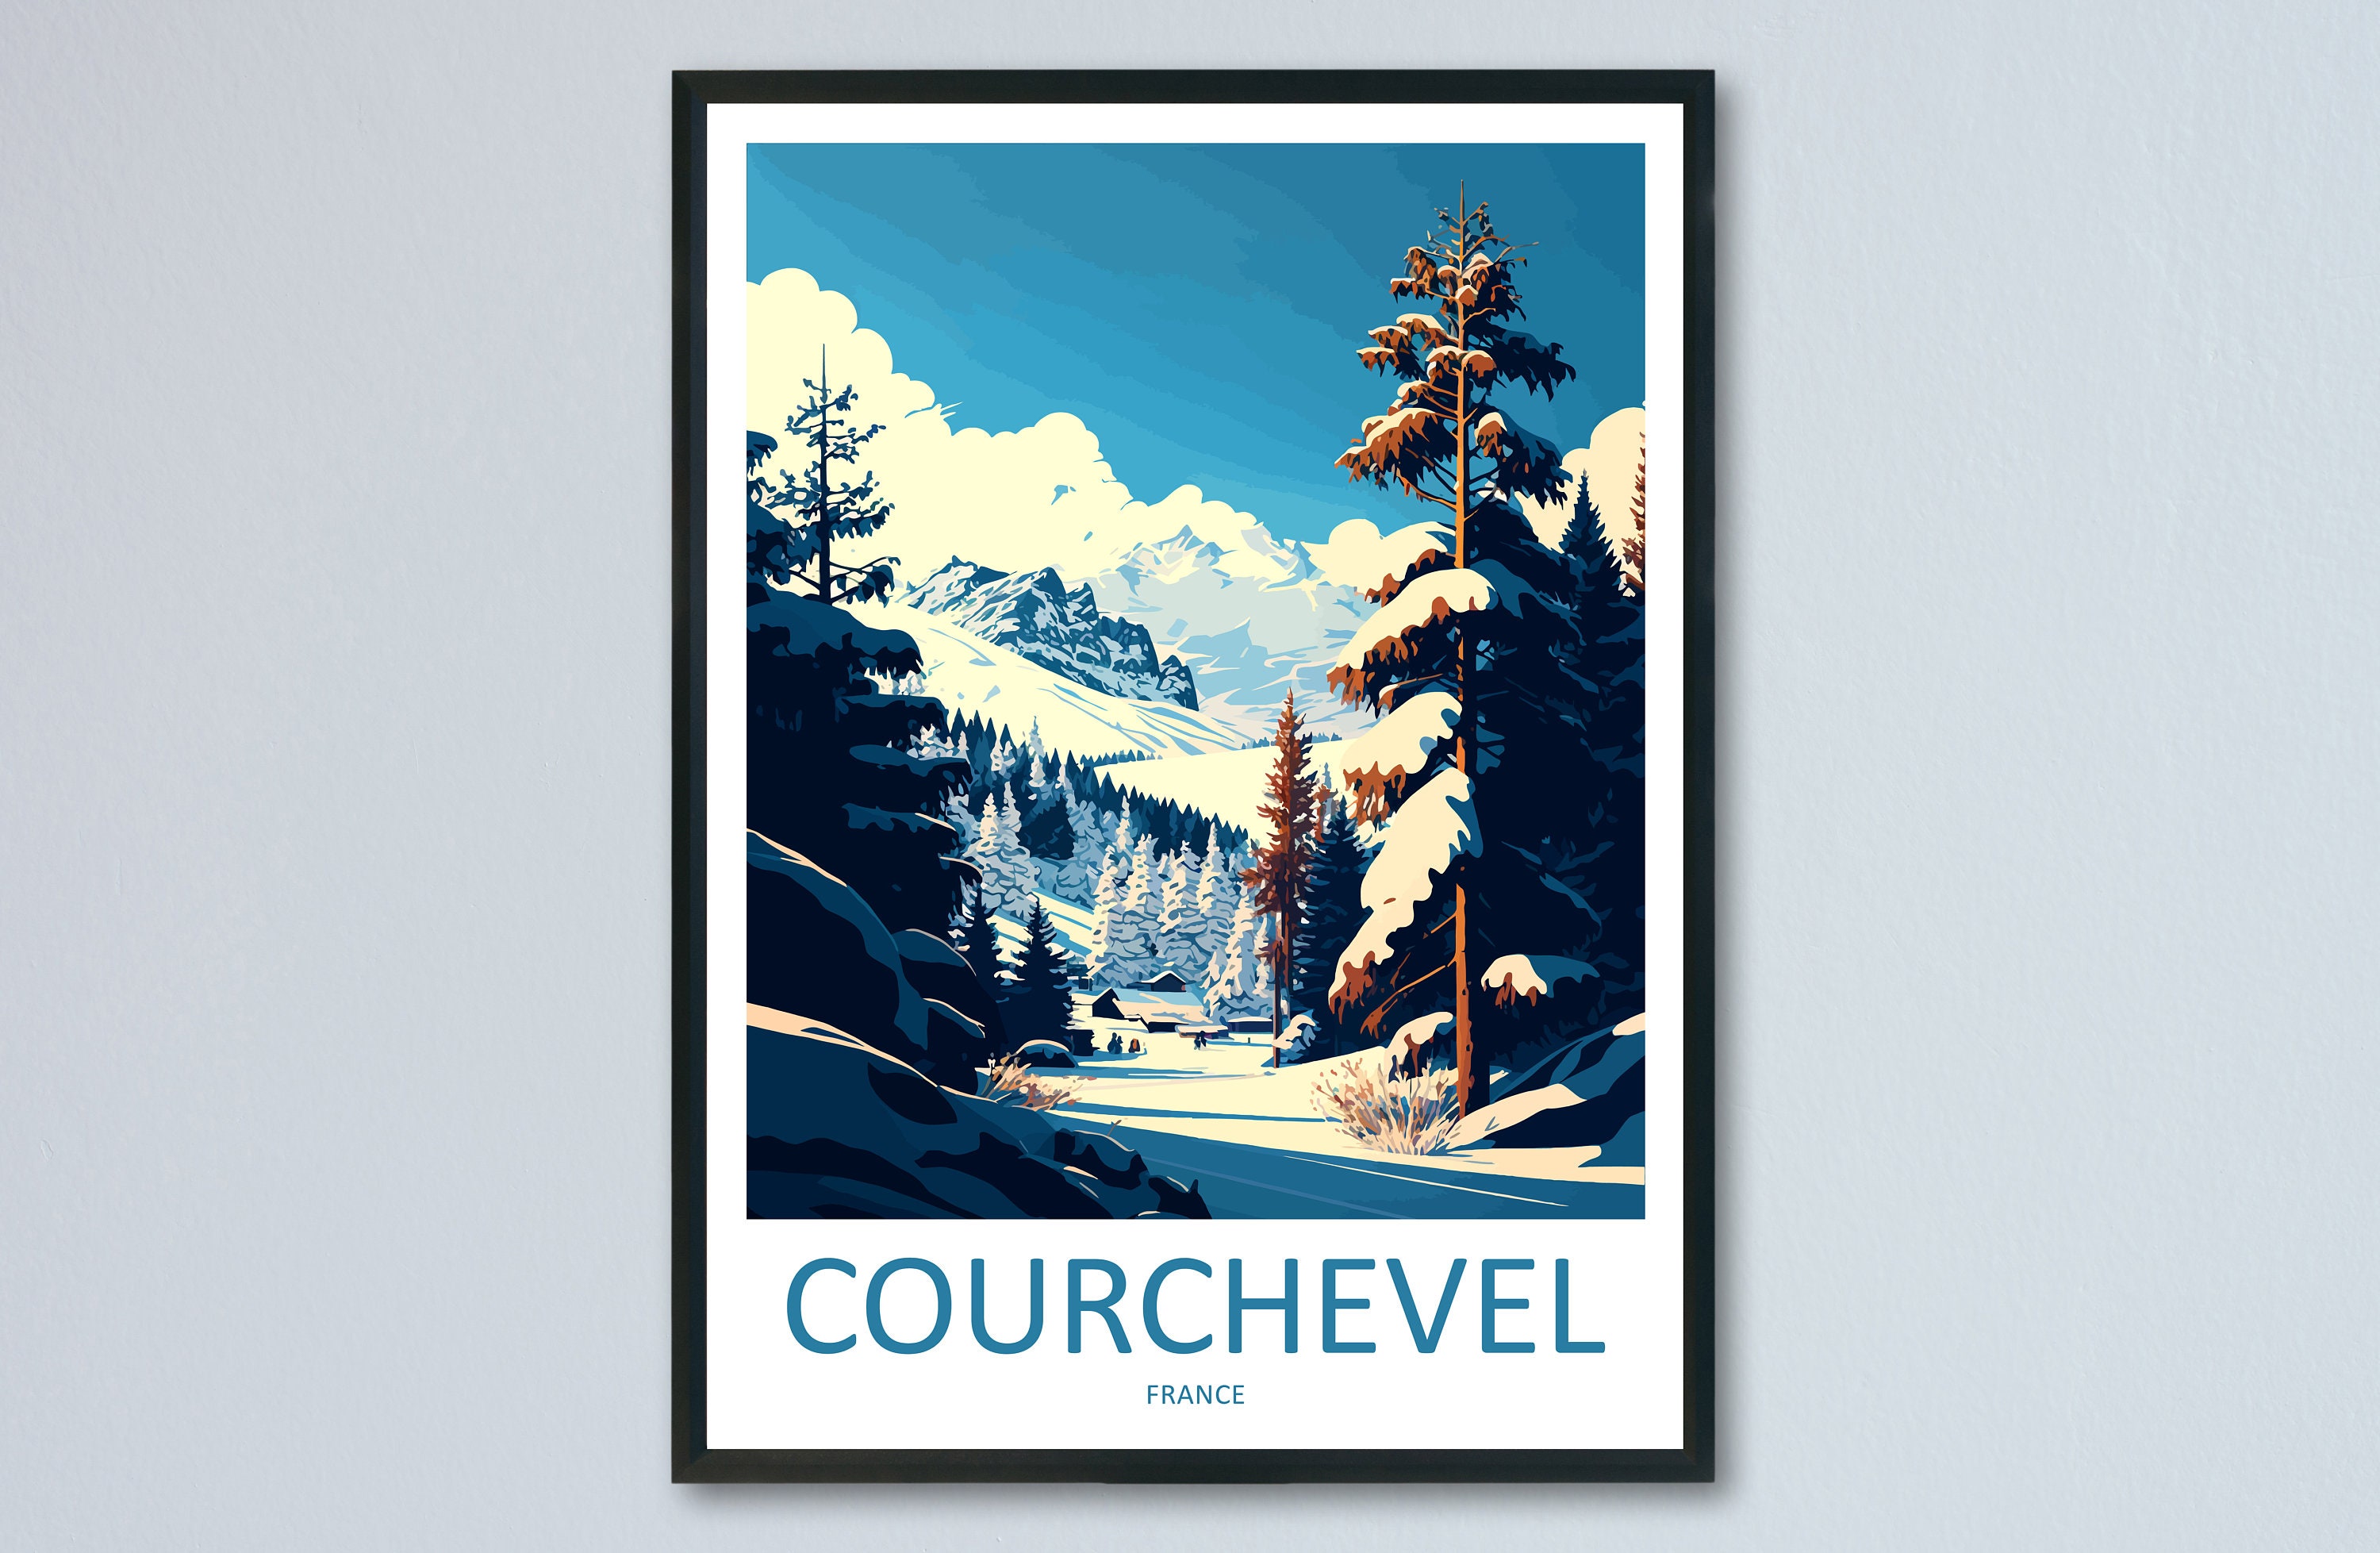 Courchevel ski resort, France - your impartial ski resort guide